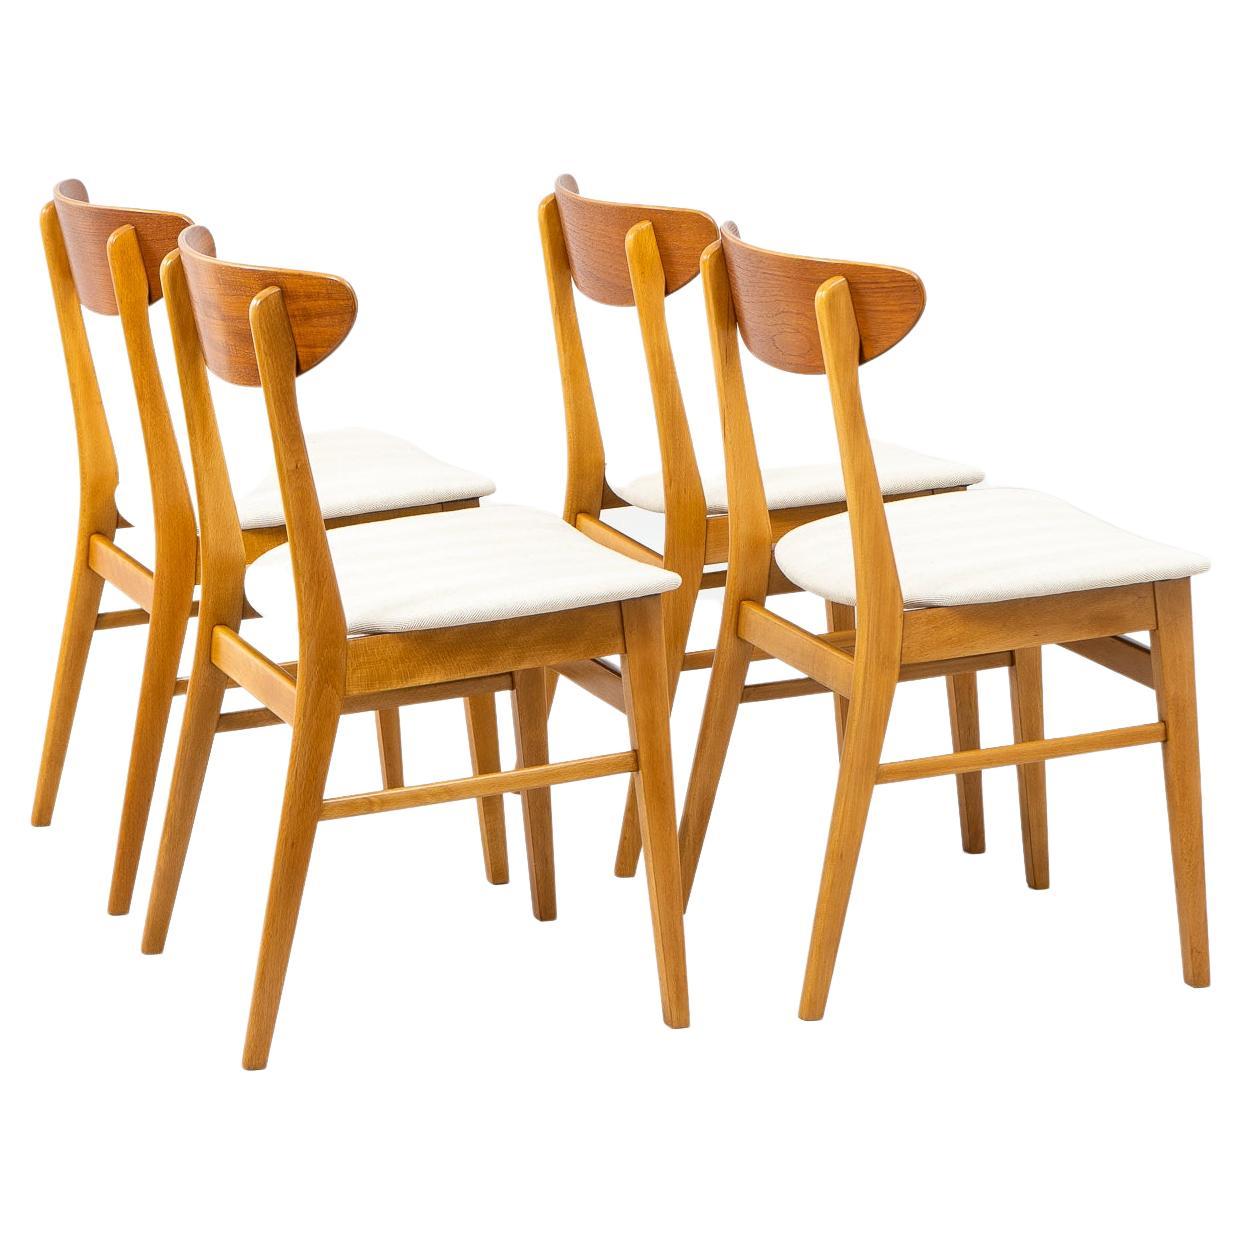 Set of 4 Teak and Beech Chairs Model 210 from Farstrup Stolefabrik, circa 1960